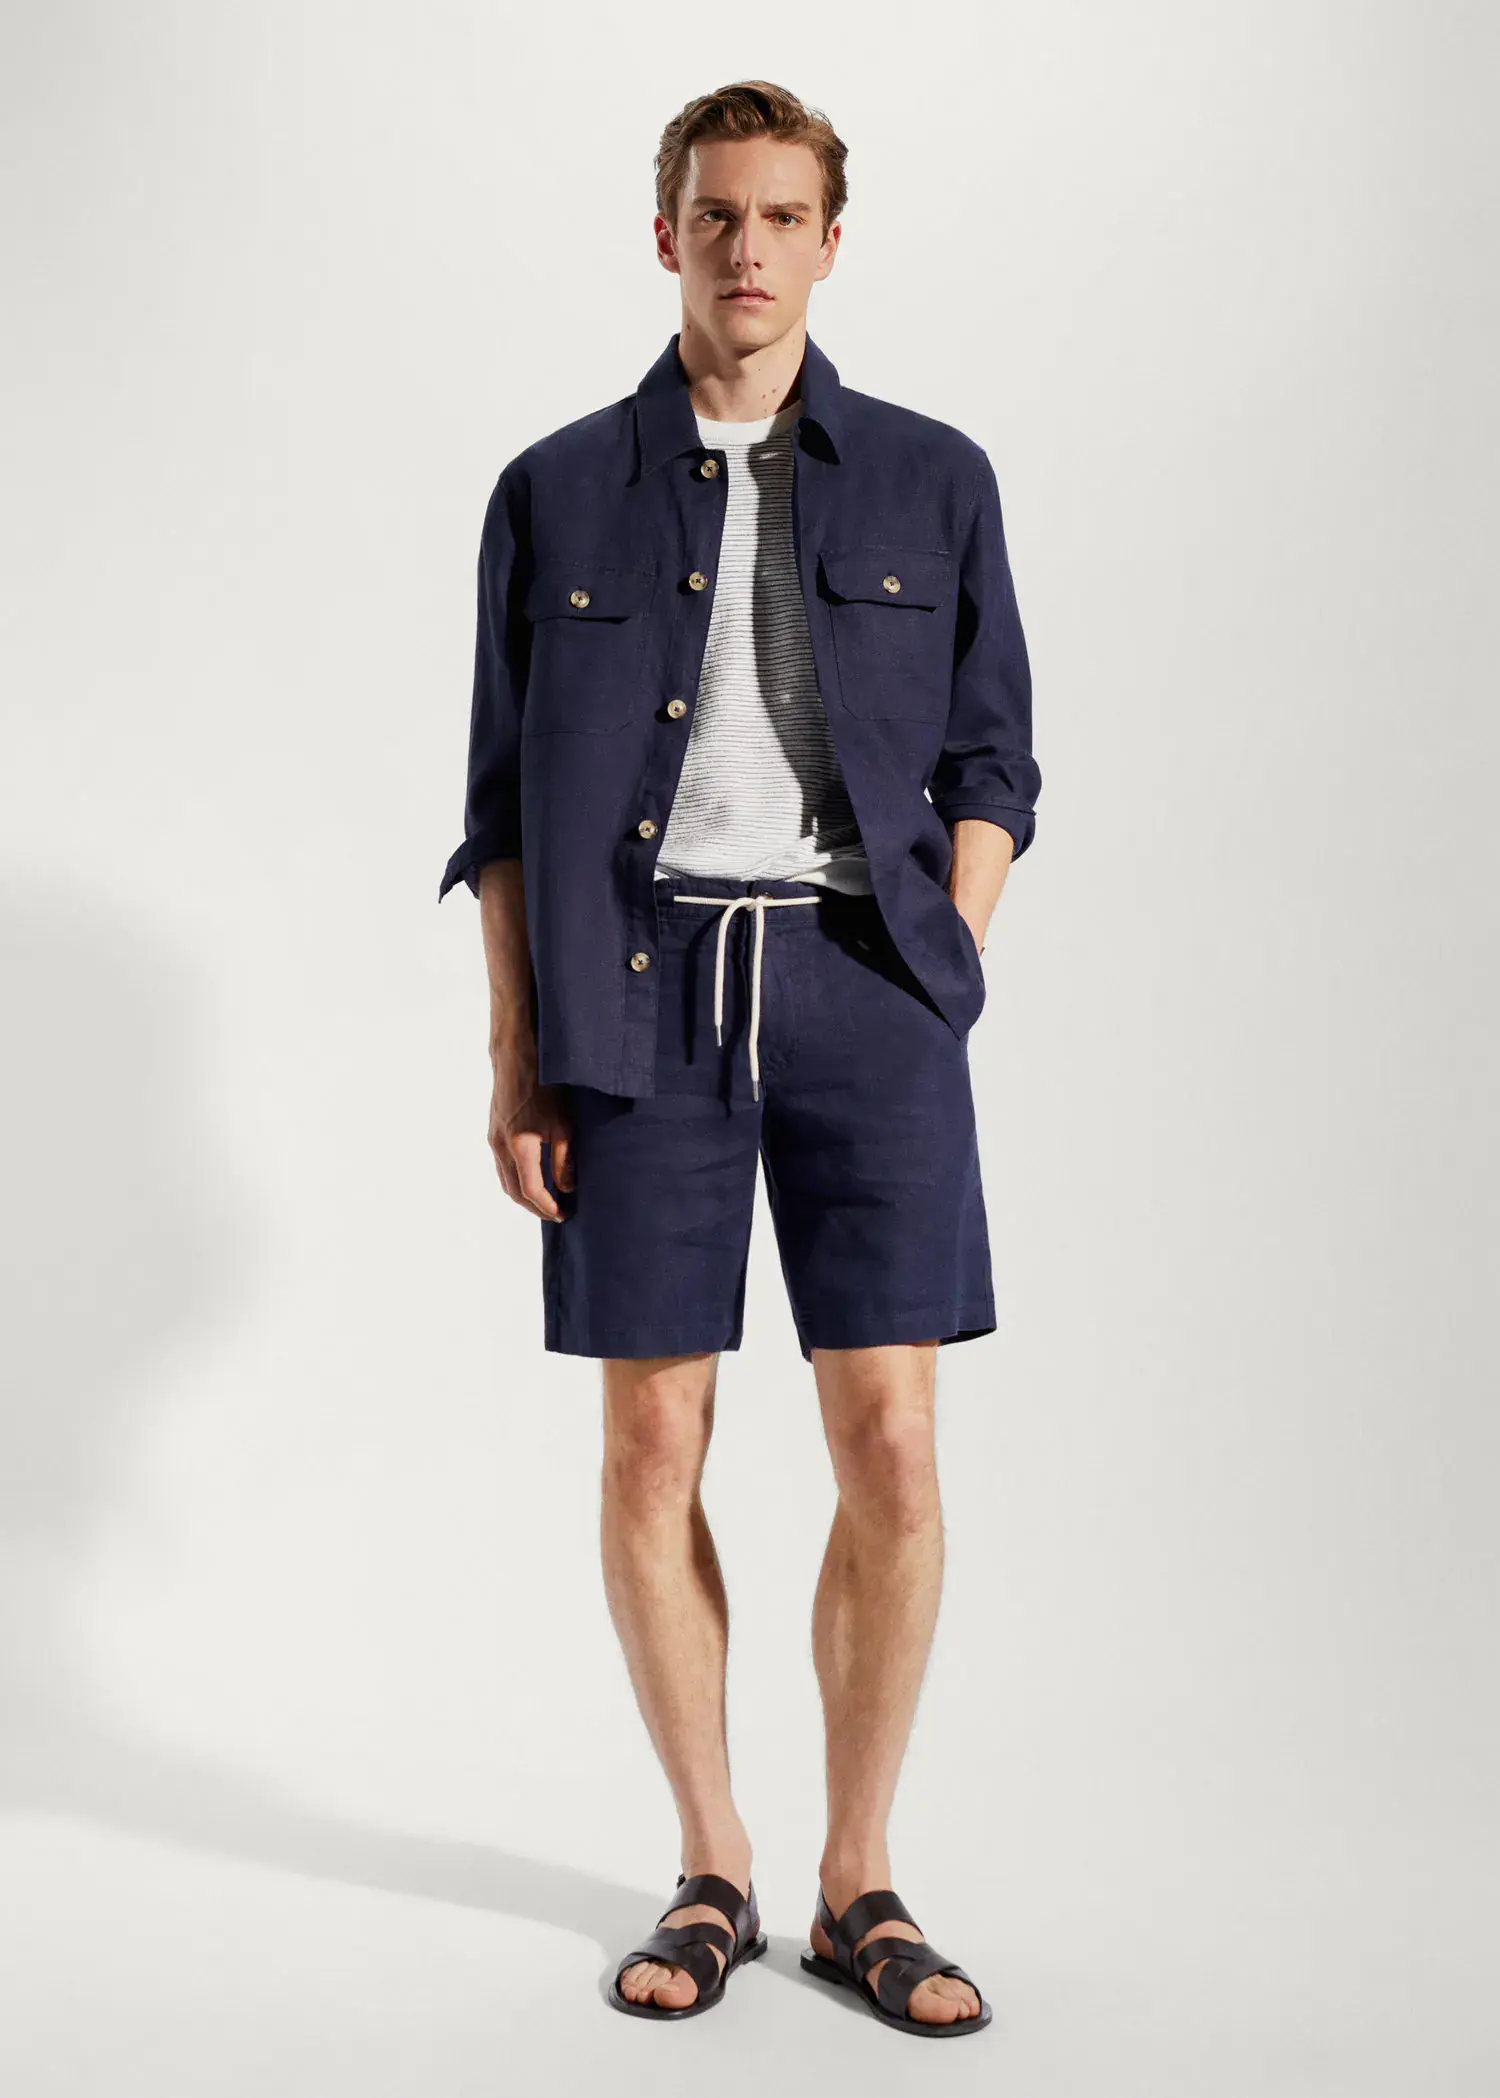 Mango 100% linen regular-fit overshirt. a man in a blue jacket and shorts. 